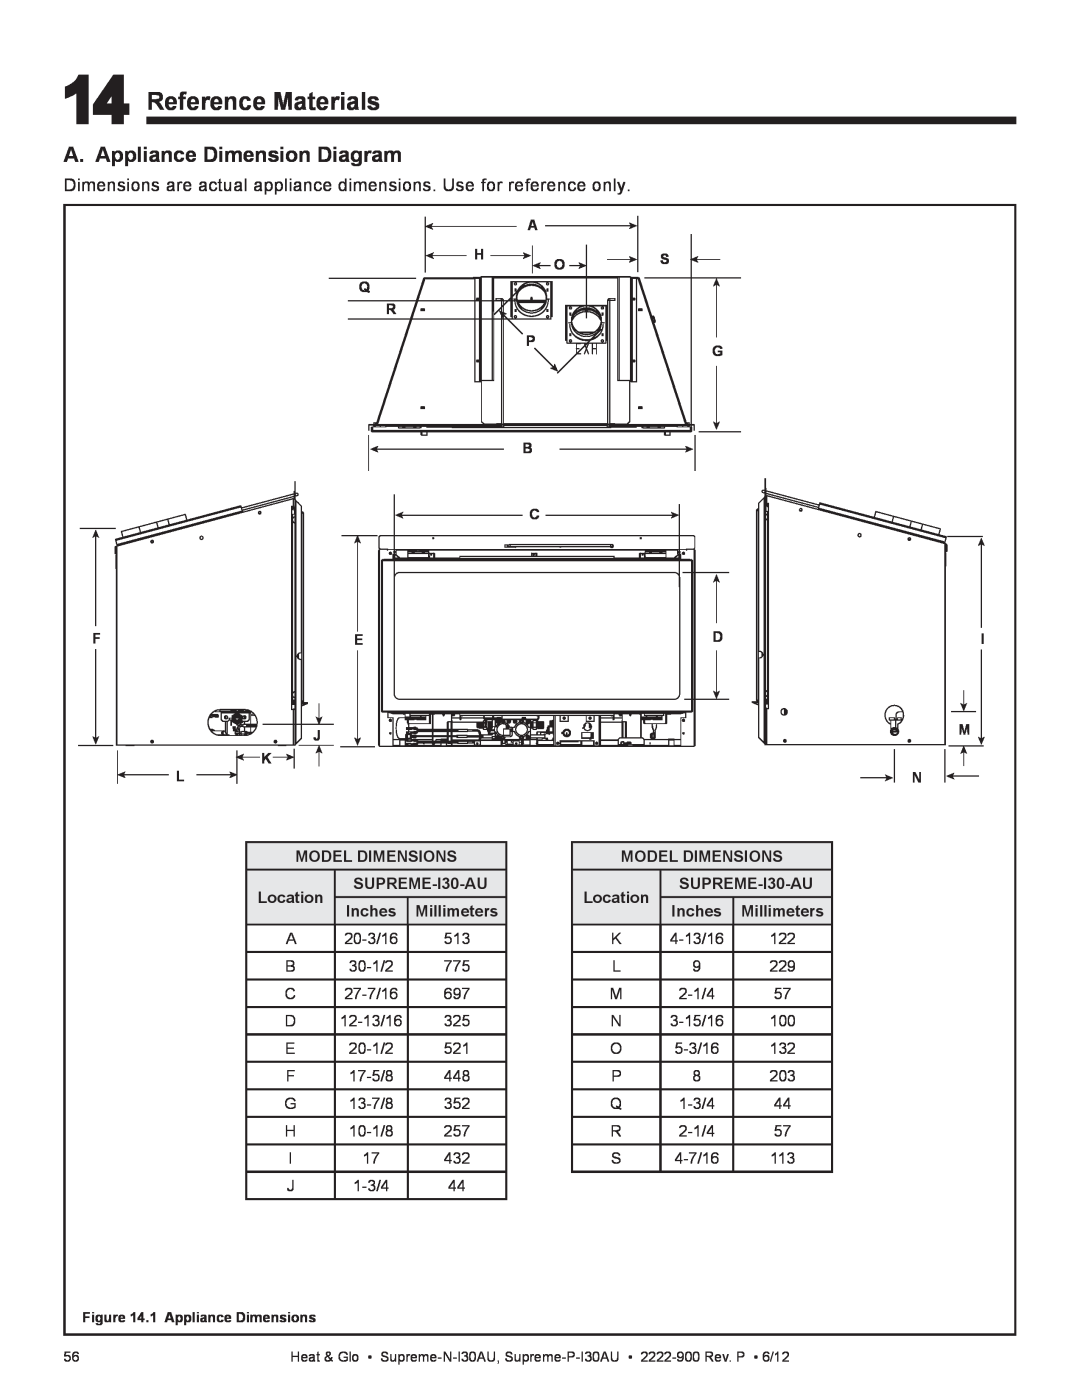 Heat & Glo LifeStyle SUPREME-P-I30AU, SUPREME-N-I30AU owner manual Reference Materials, A. Appliance Dimension Diagram 